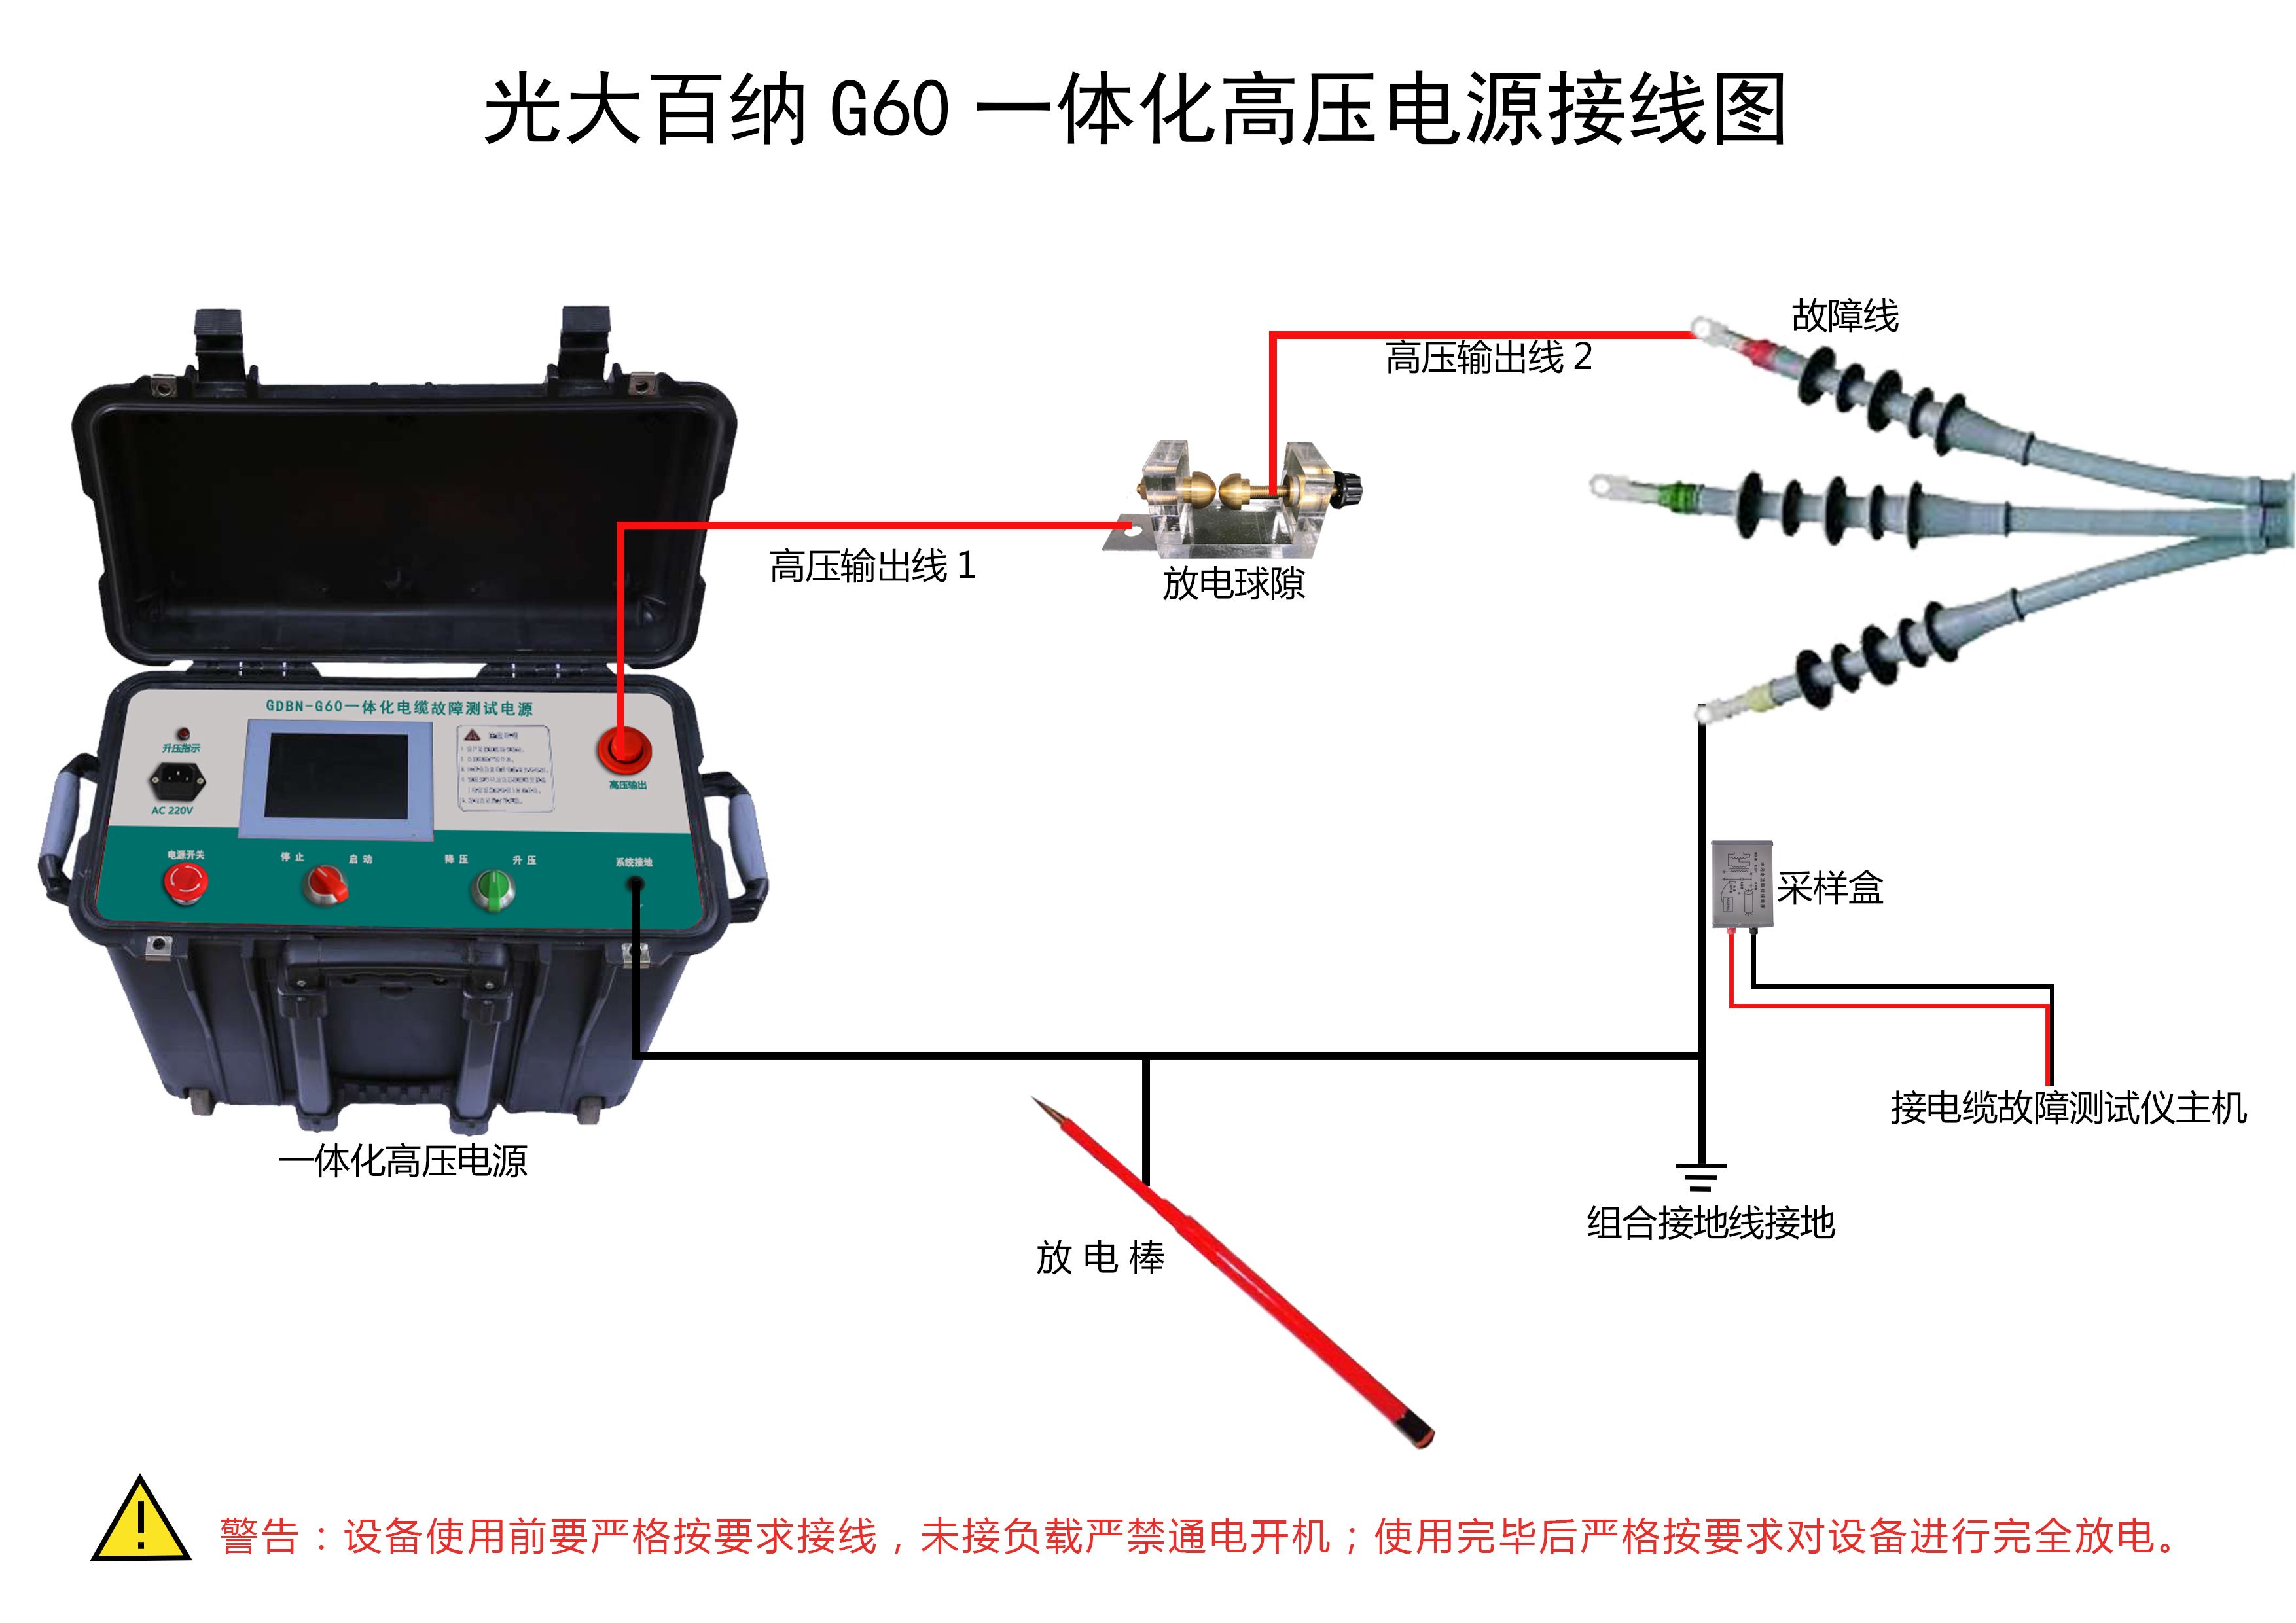 GDBN-G60电缆测试高压信号发生器接线示意图